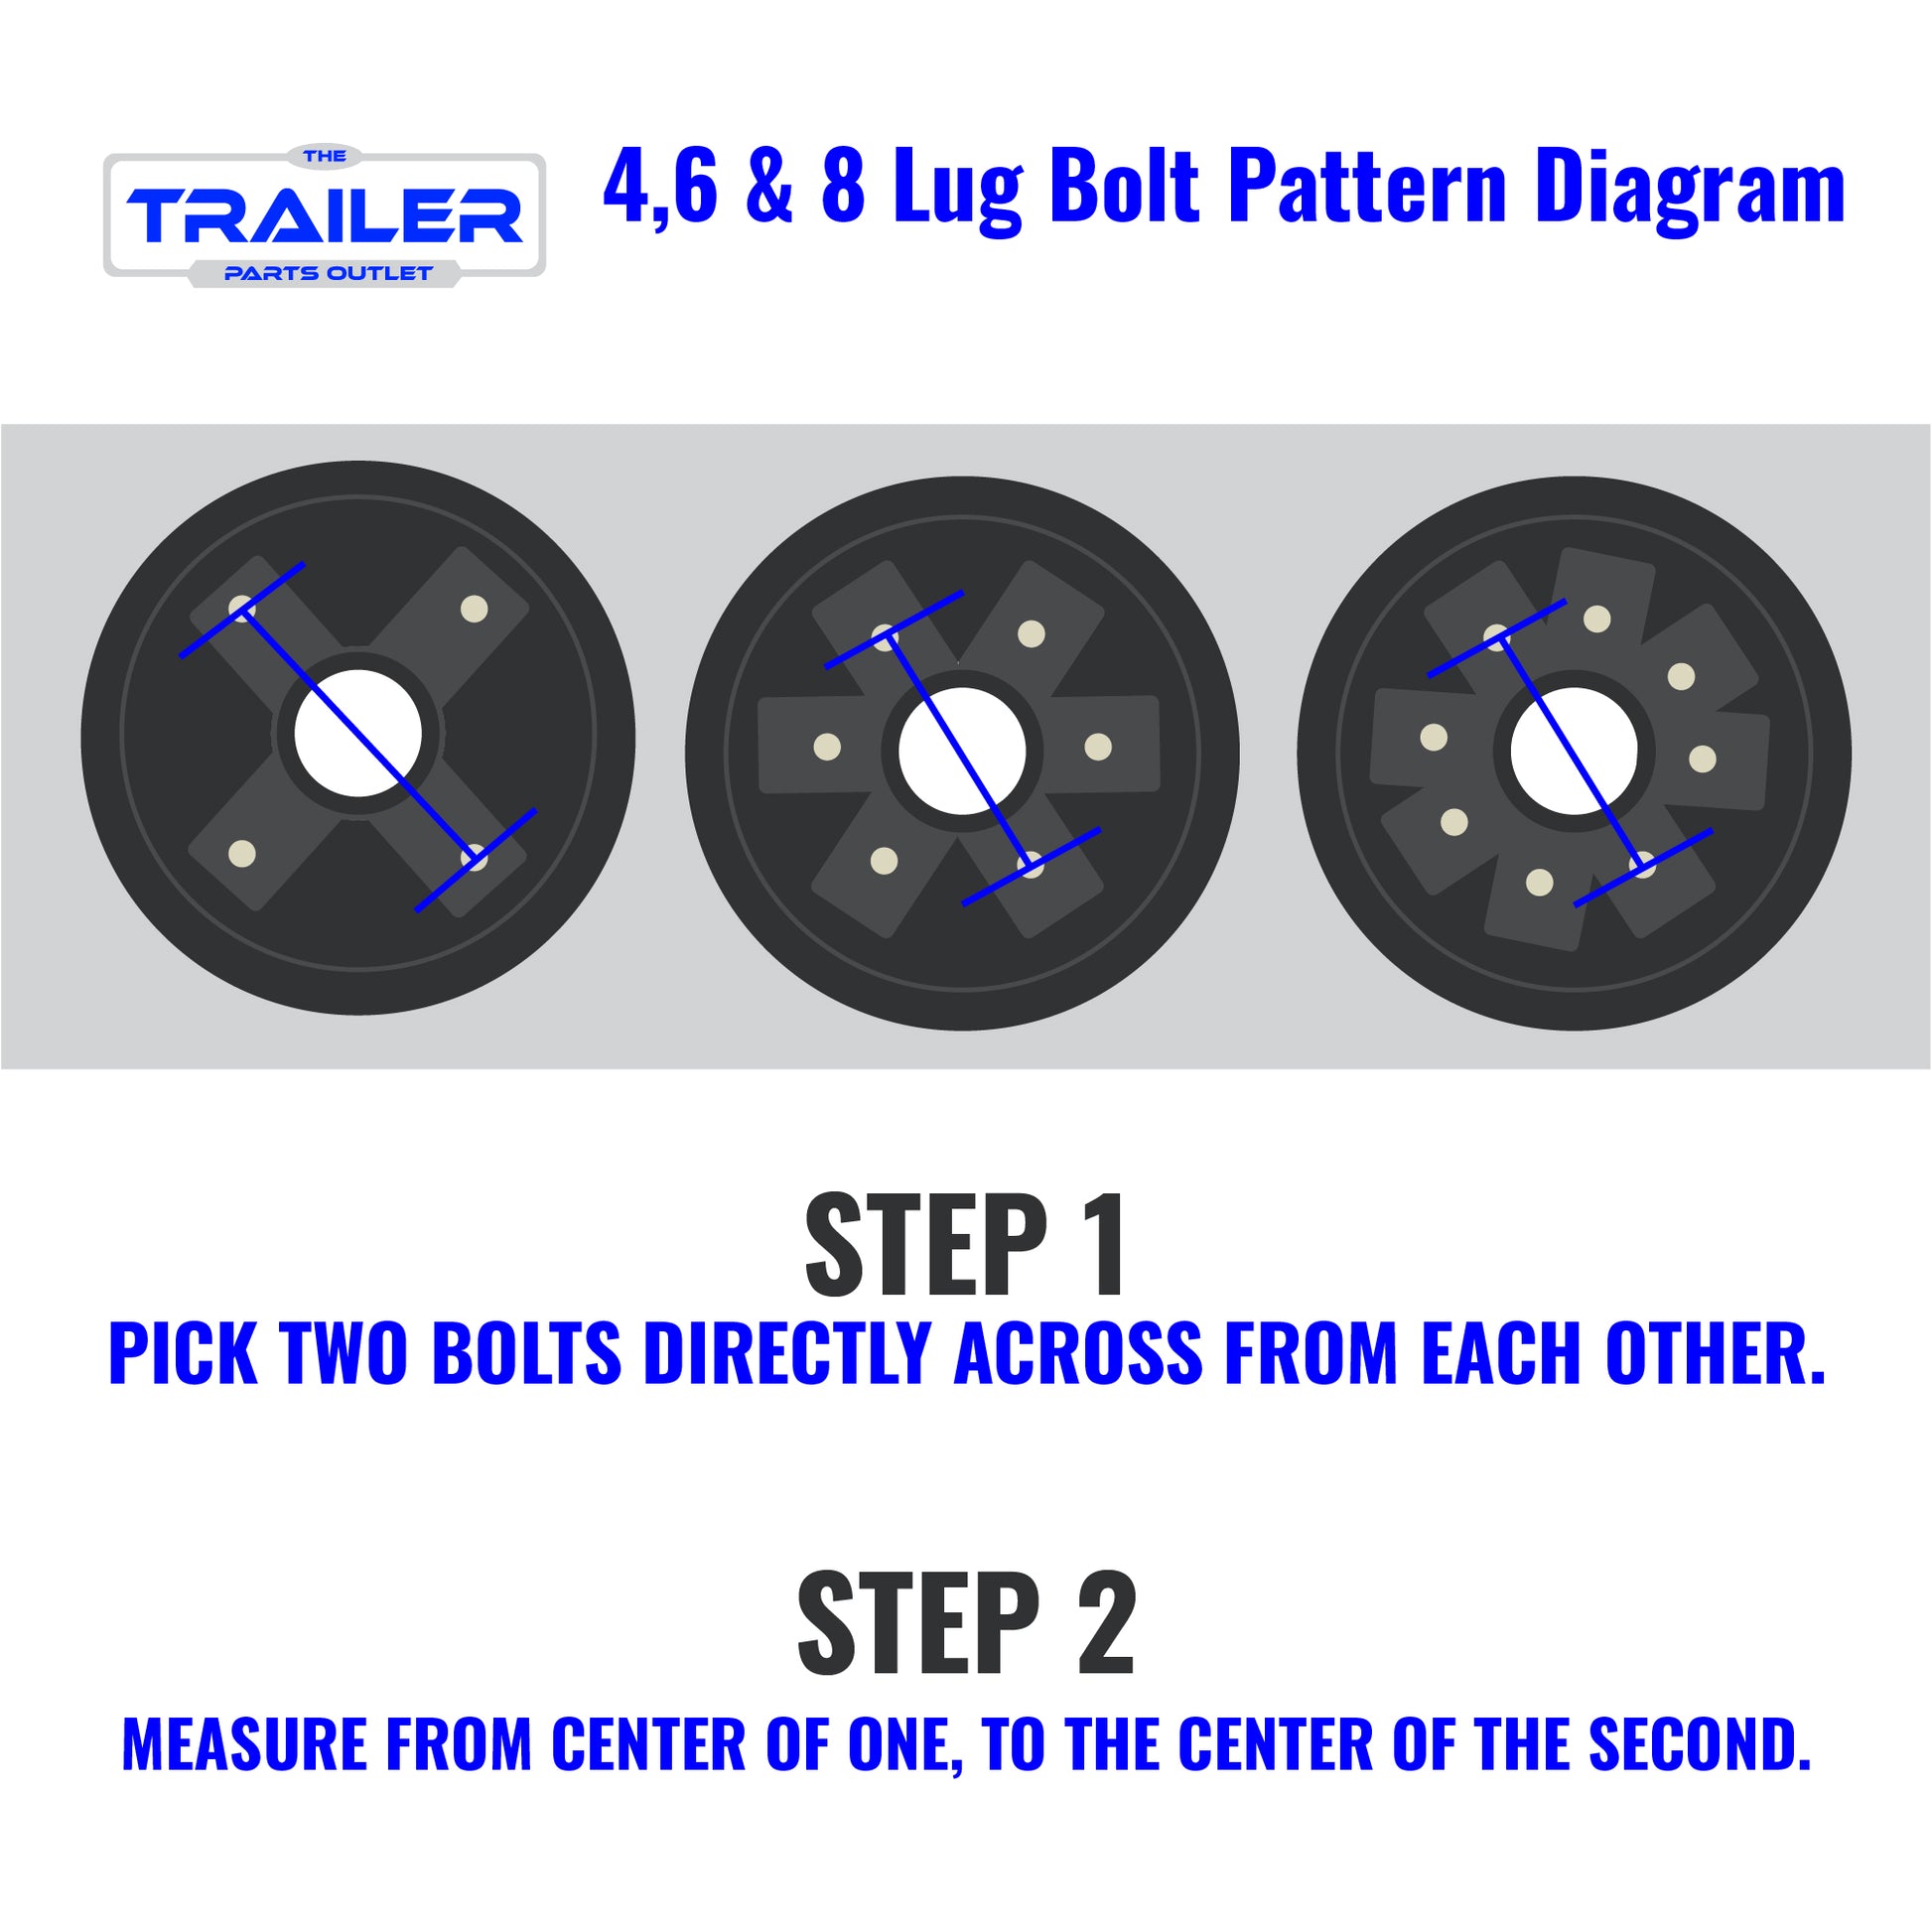 Lug Bolt Pattern Diagram Steps 1 & 2